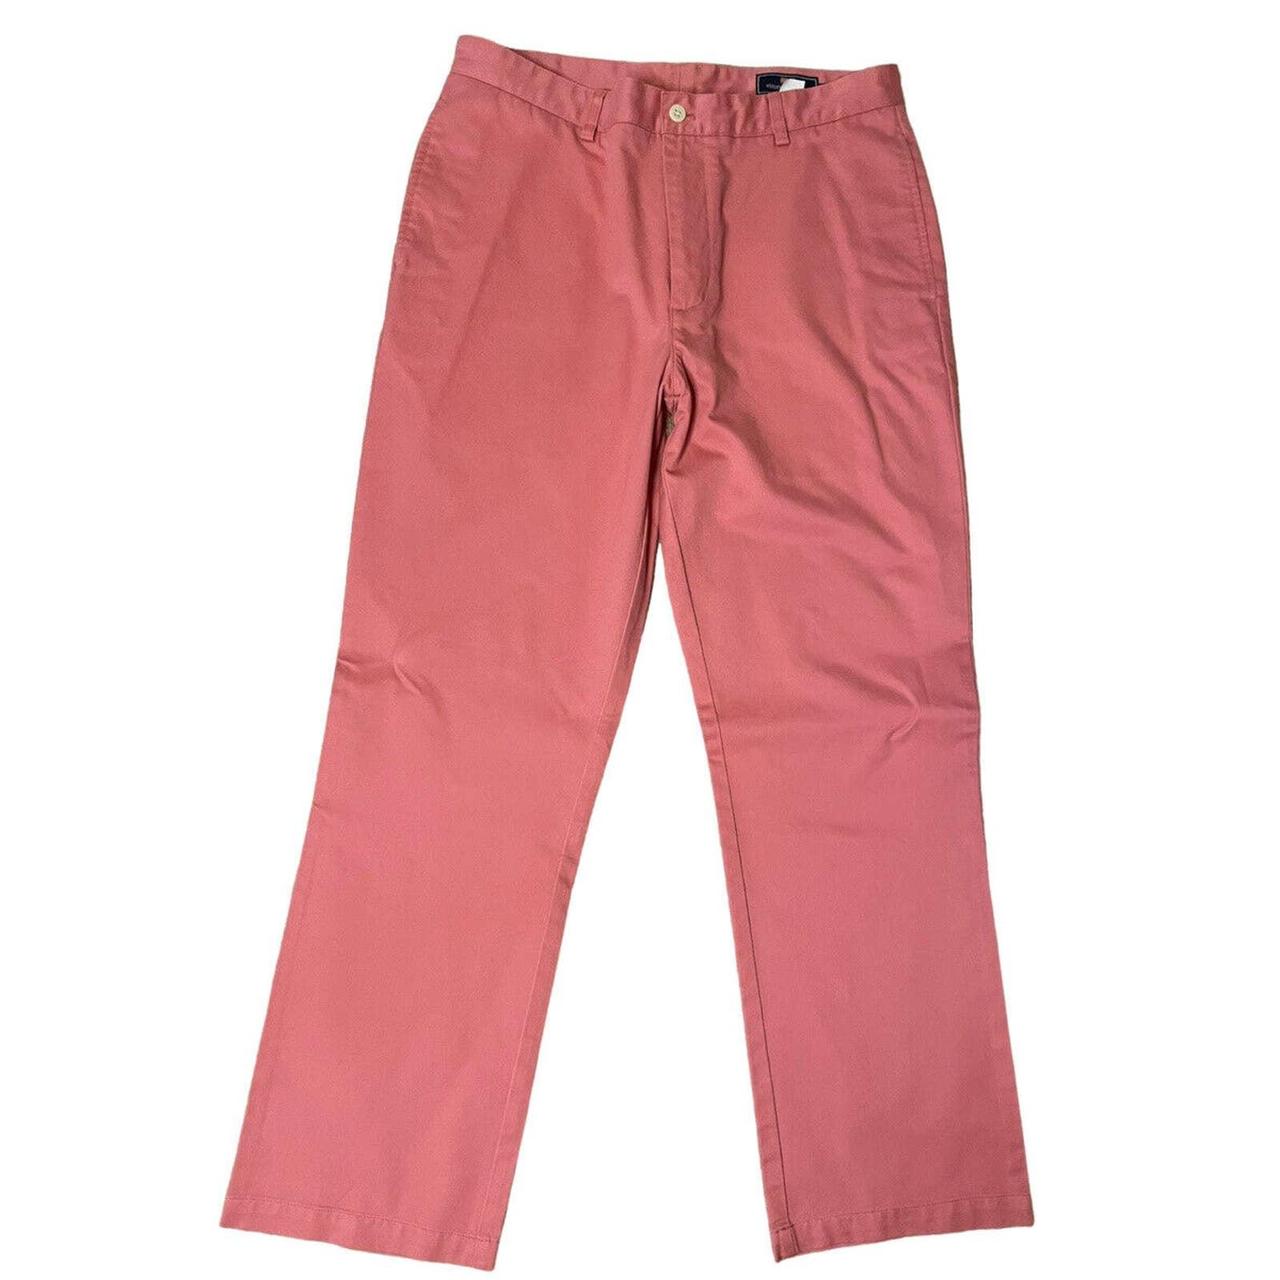 Vineyard Vines Men's 28x32 On-the-Go Pants Neon Pink Rosa Technical Fabric  EUC | eBay